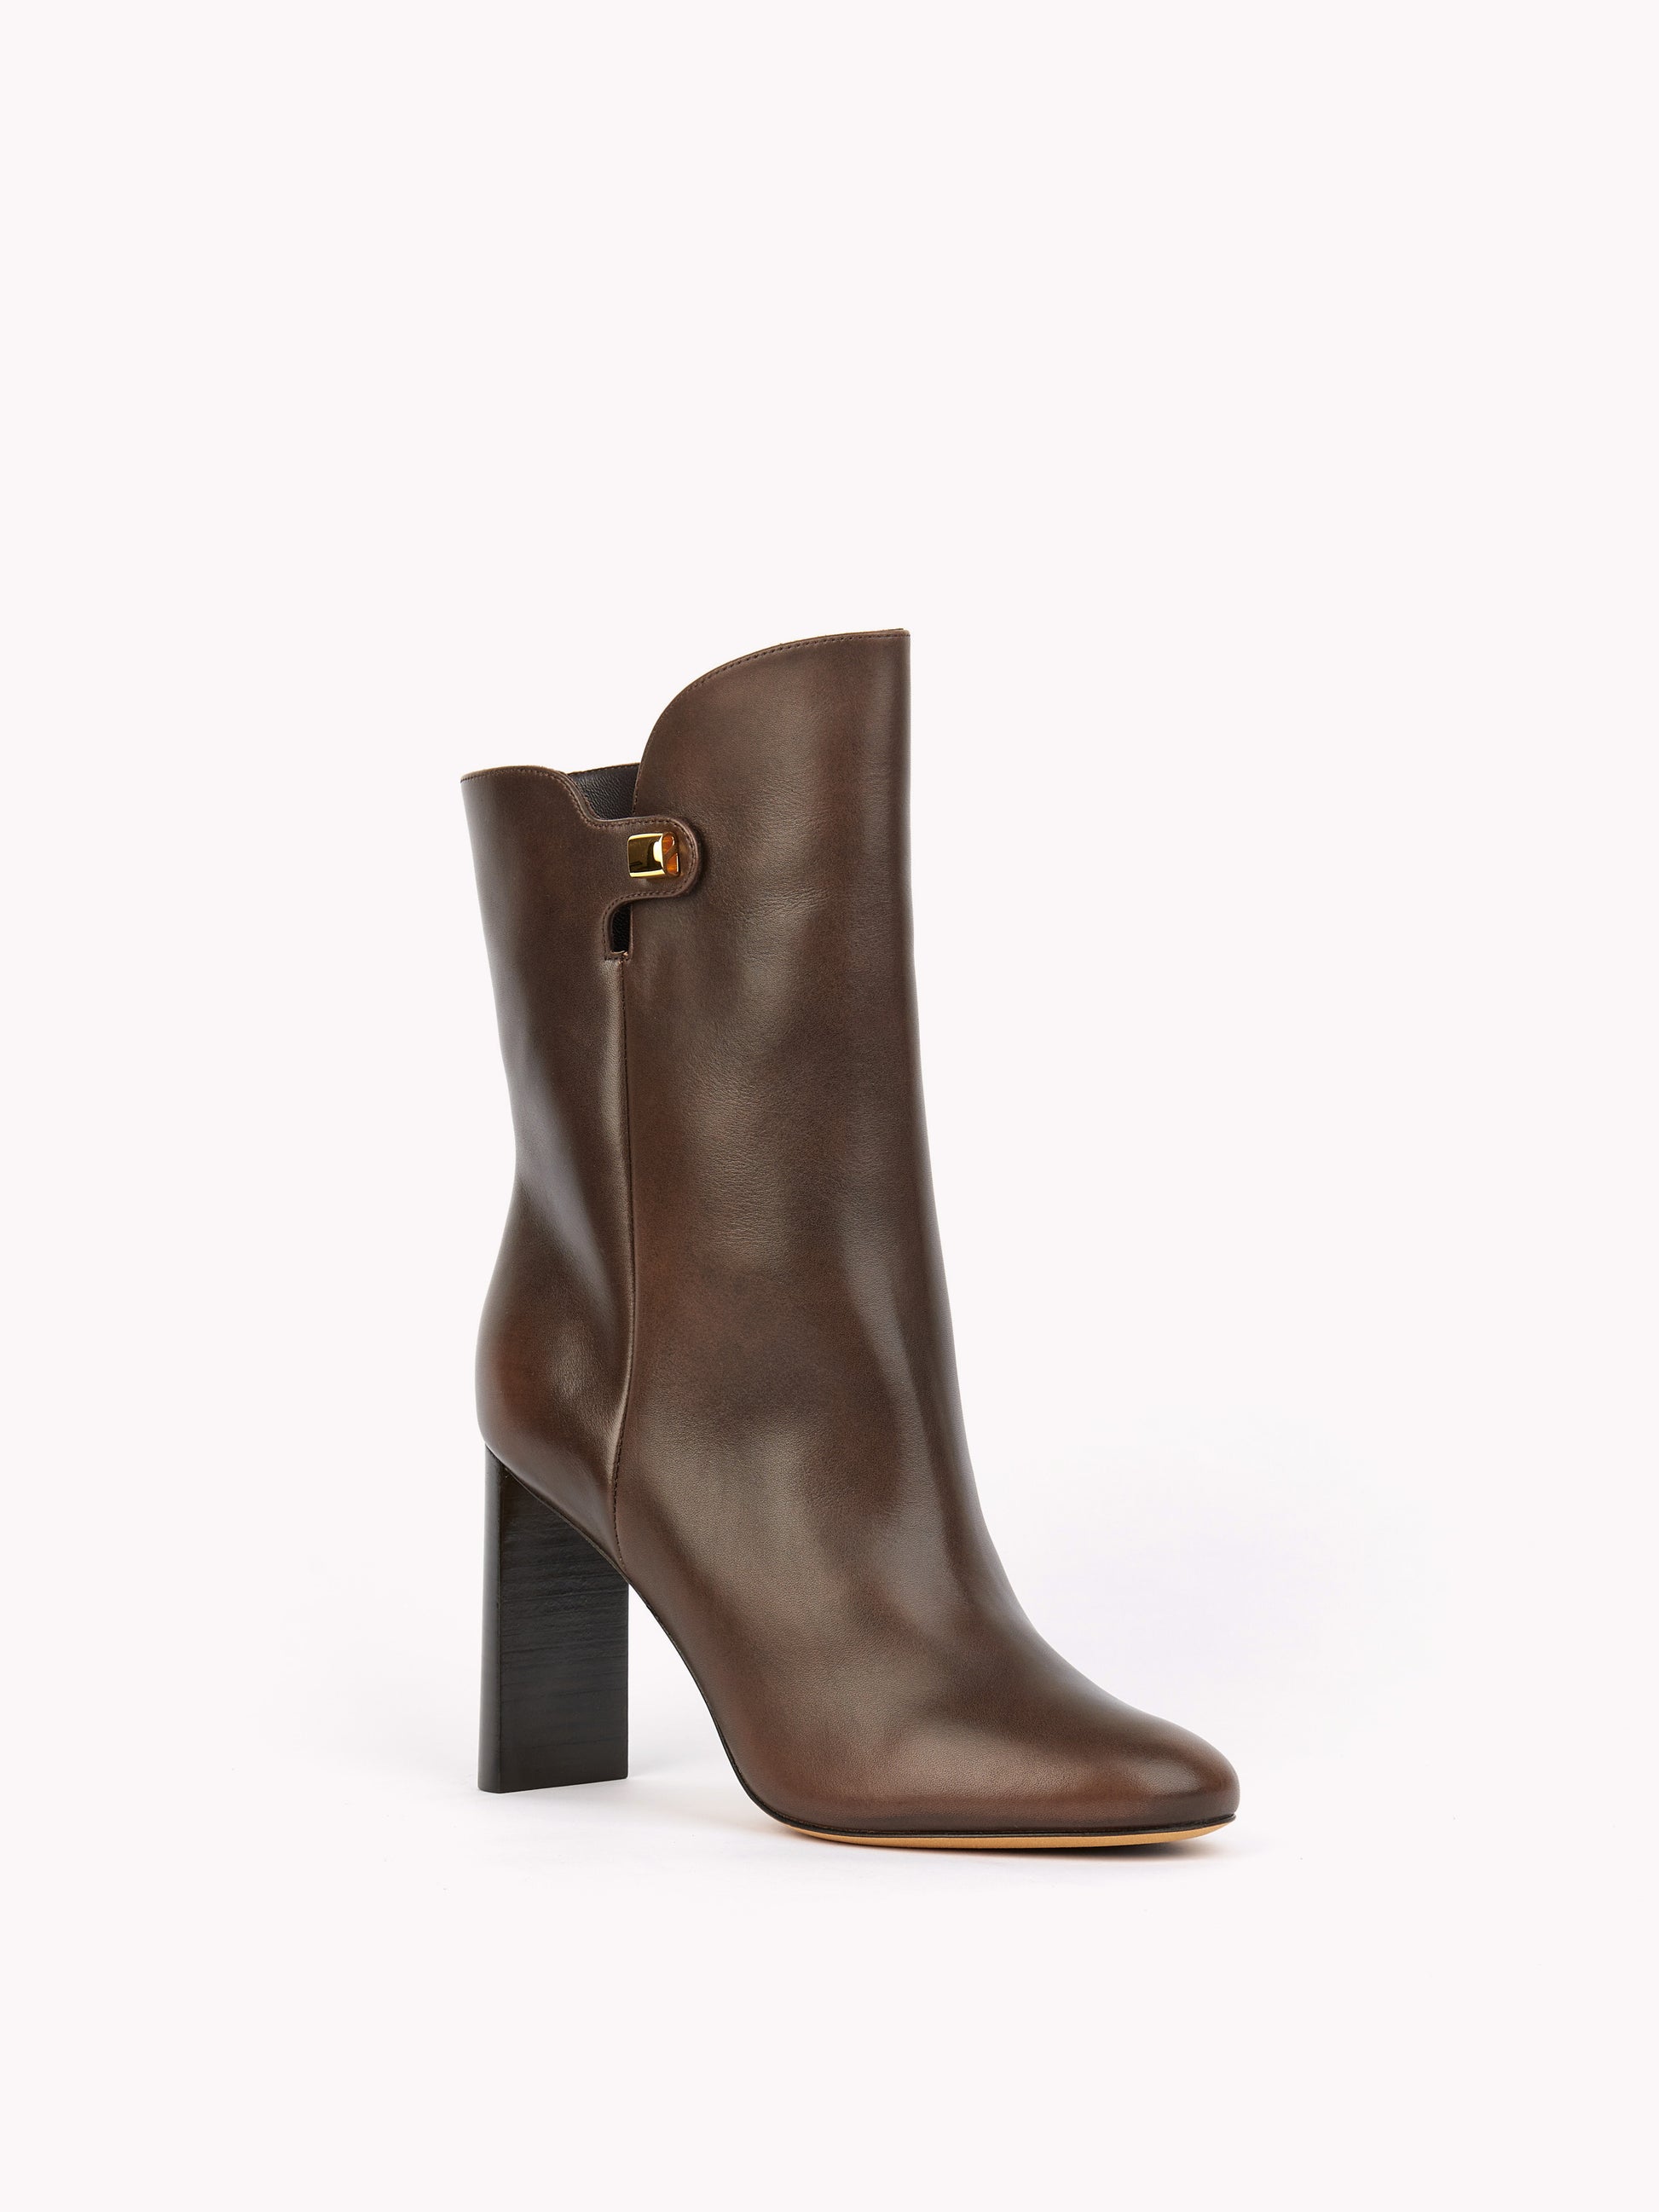 designer ankle boots brown chocolate leather high heels skorpios